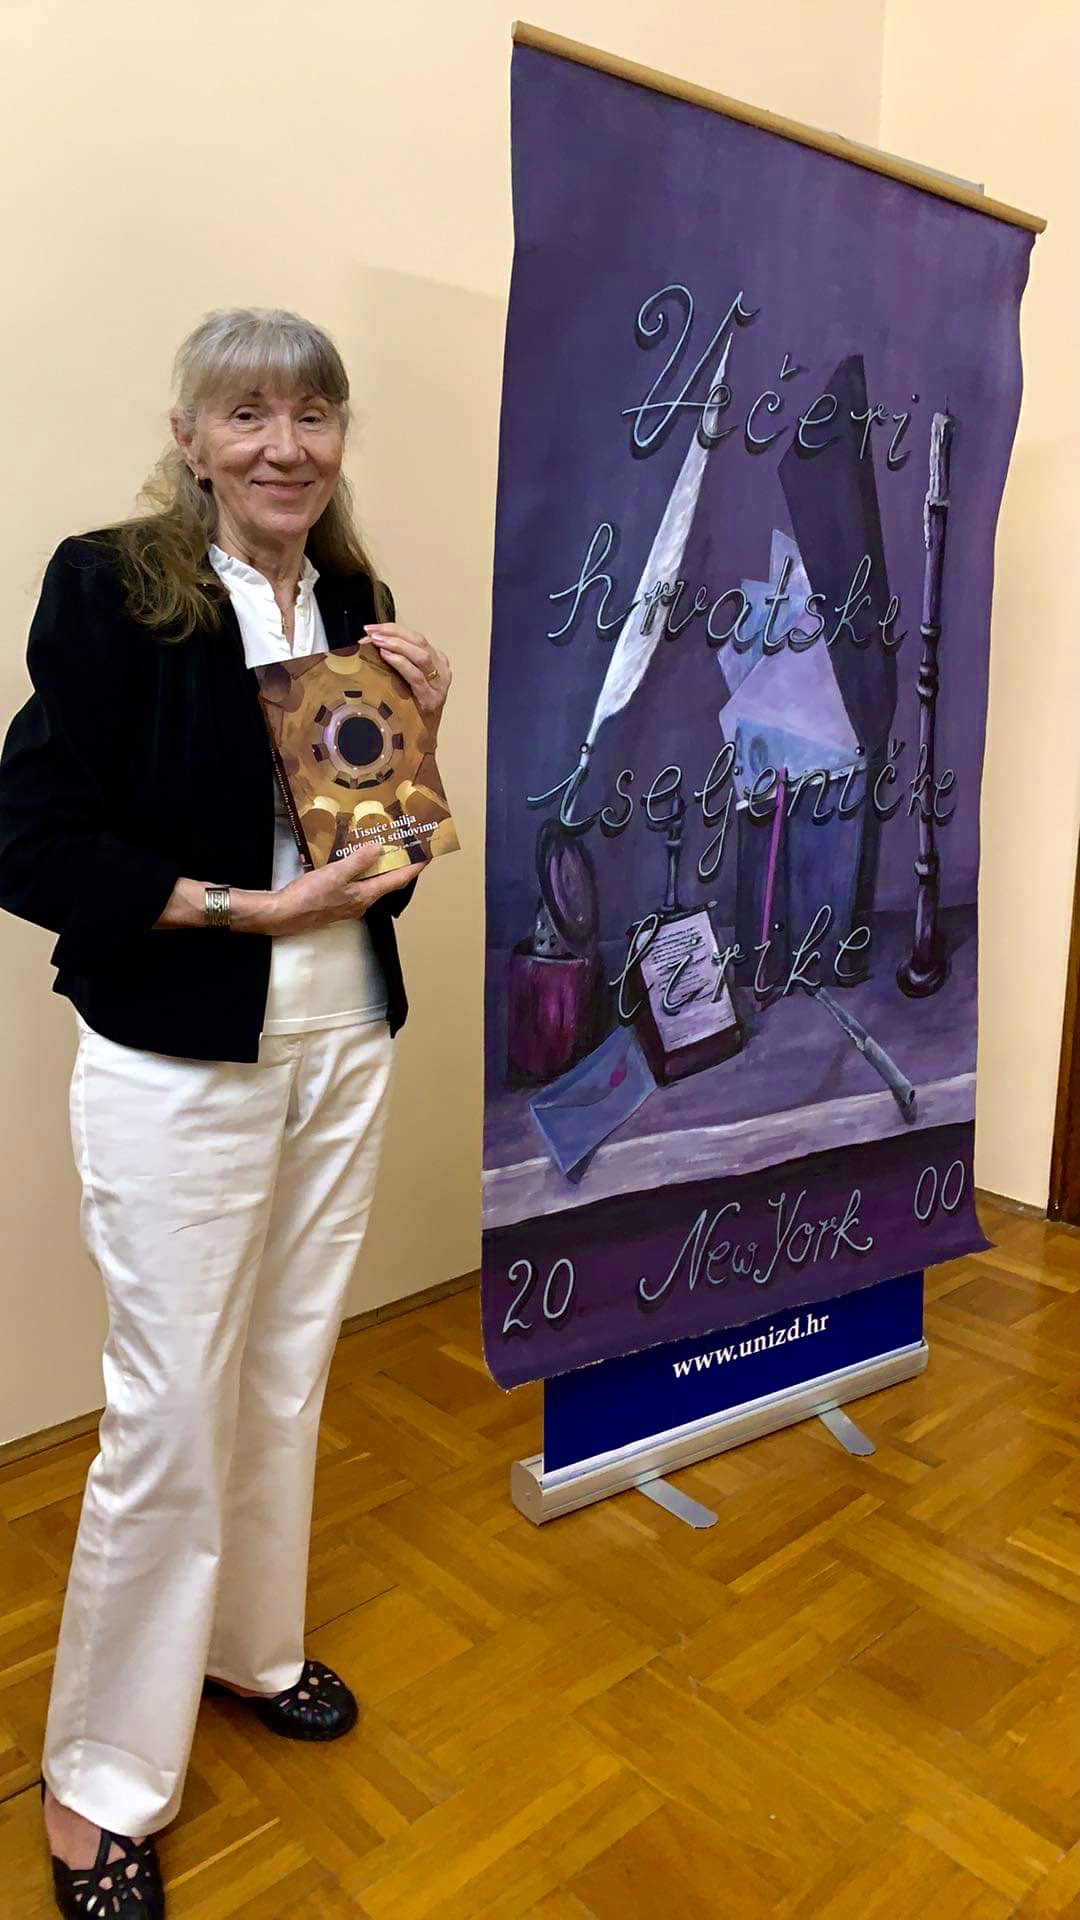 Croatian emigrant poetry association New York celebrates 20th anniversary at the University of Zadar